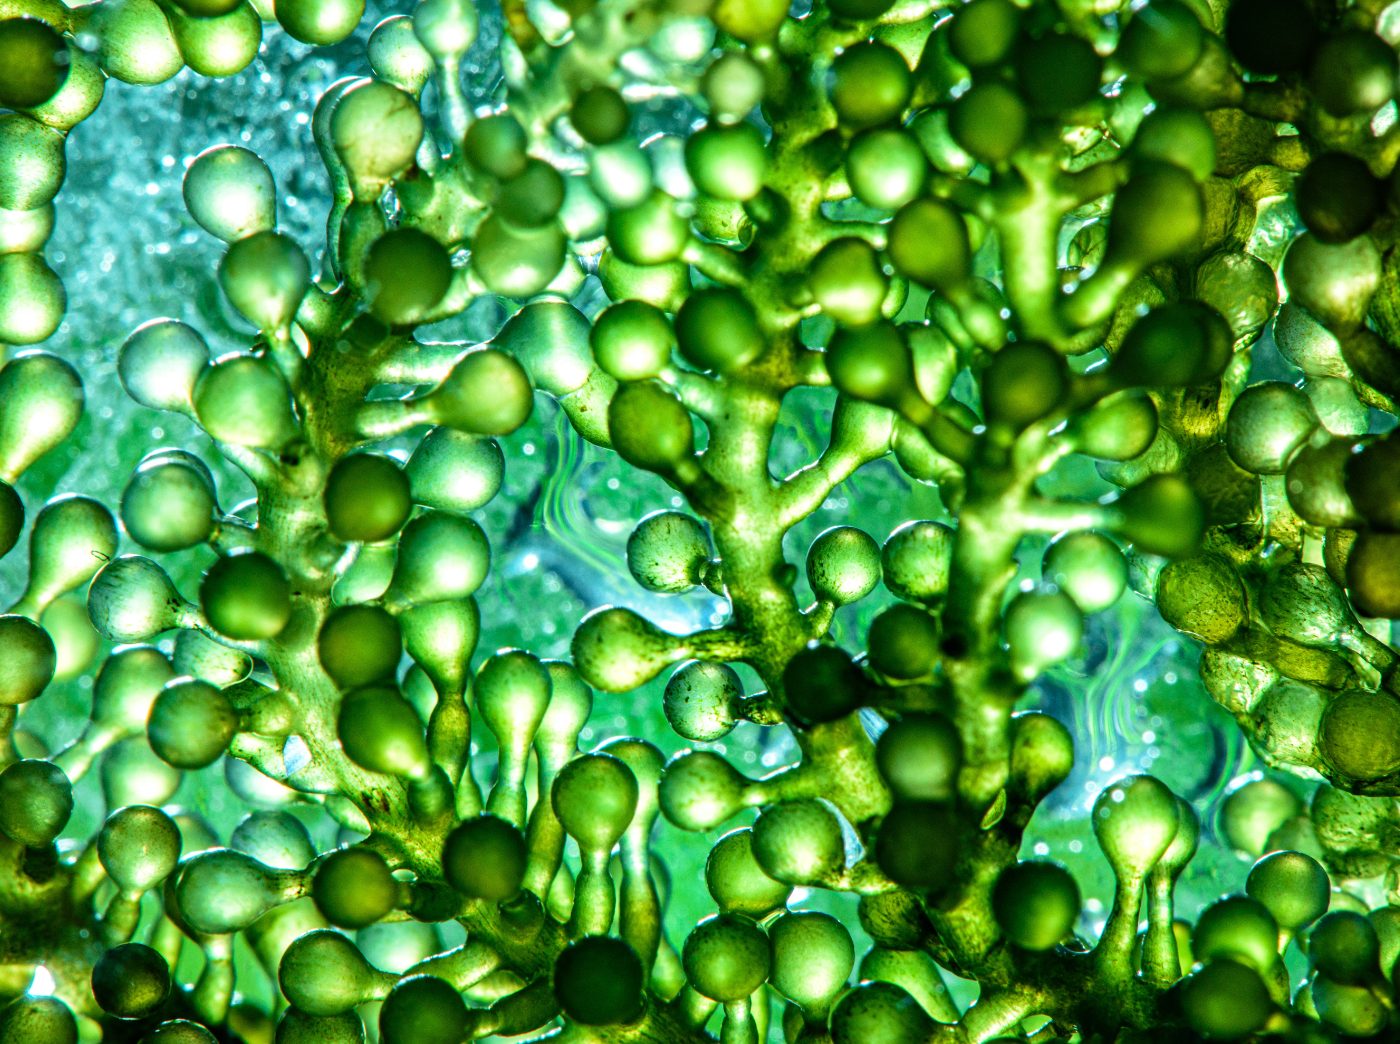 Alimentos a base de microalgas: materias primas alternativas prometedoras